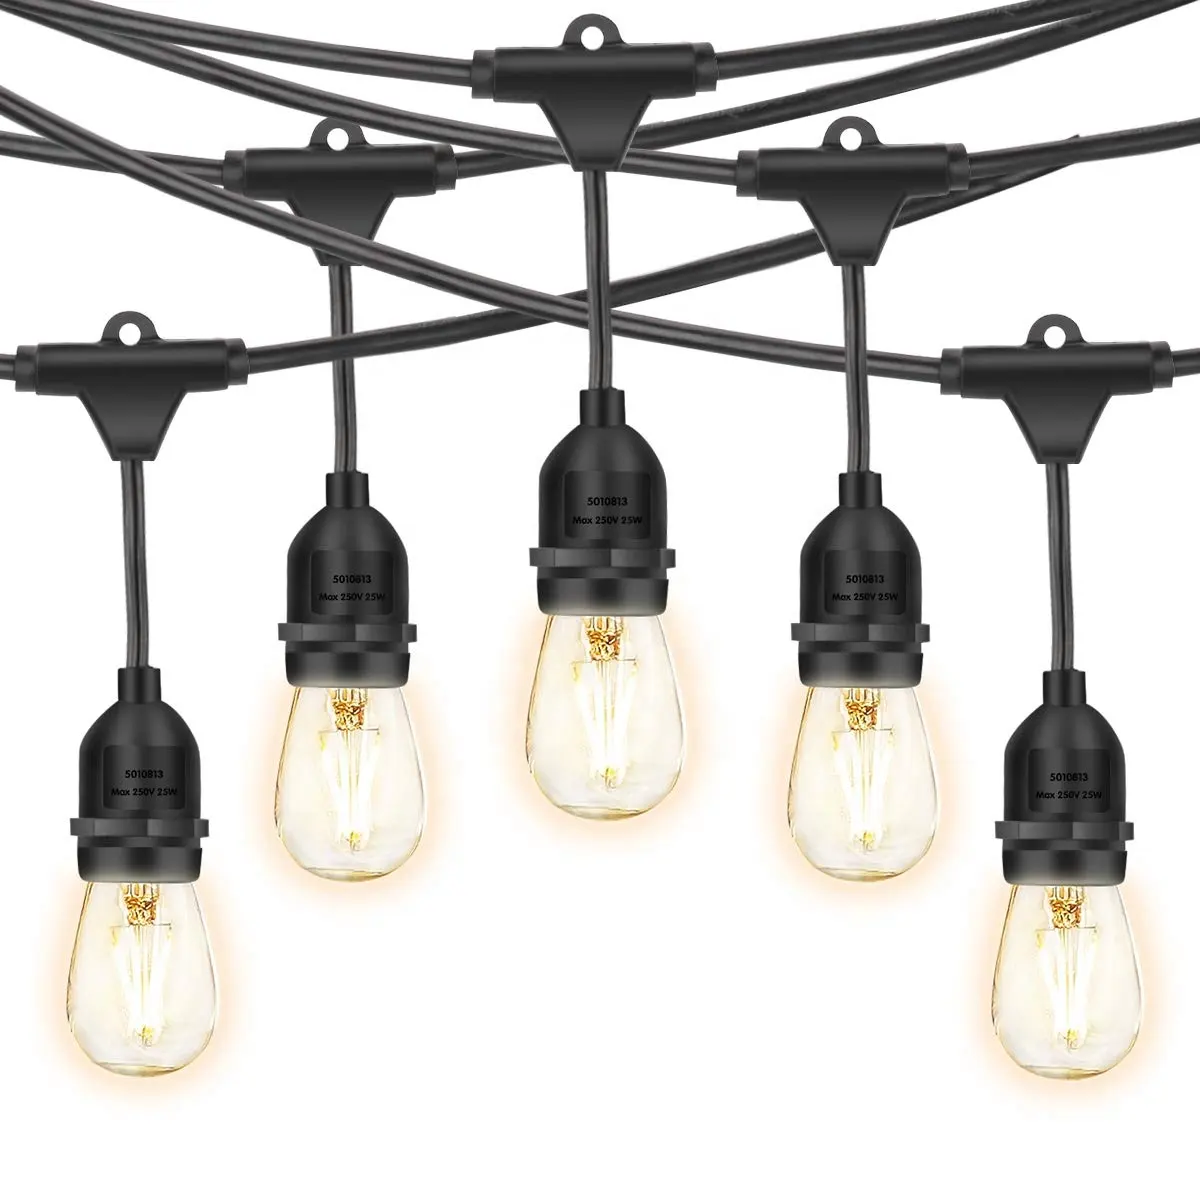 Waterproof 48ft E26 15 Lamps Vintage LED Edison Bulb Indoor Outdoor Garden Bistro Patio Party Festoon String Lights